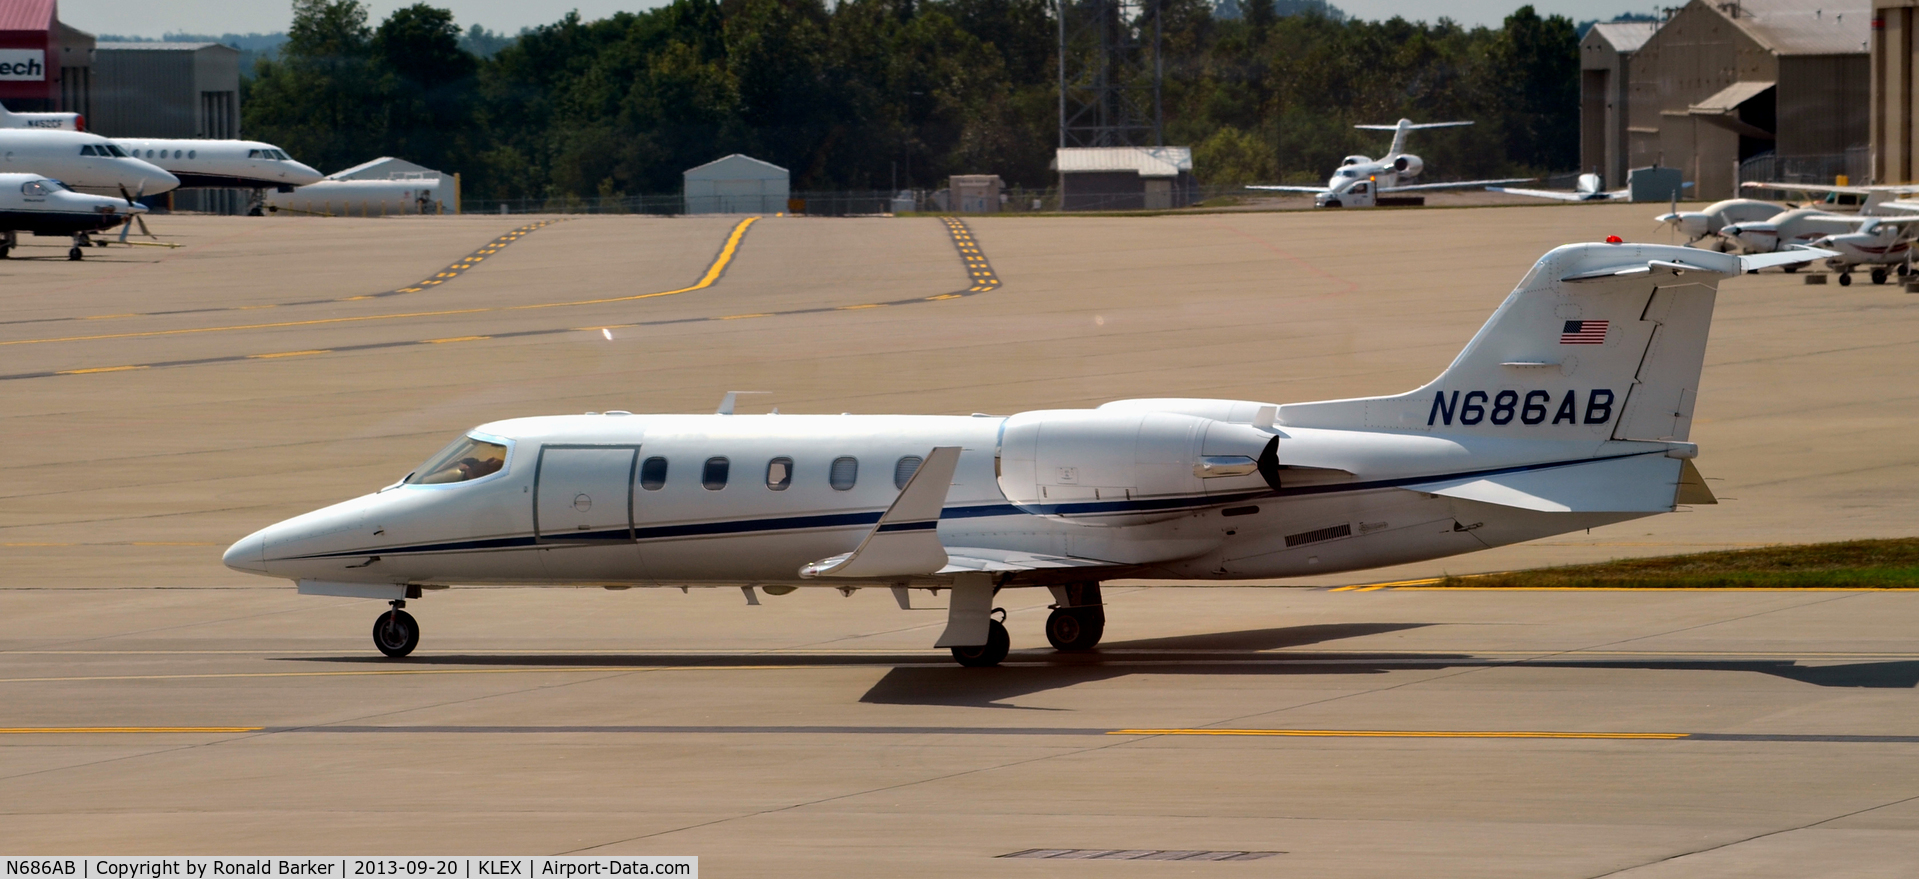 N686AB, 2002 Learjet Inc 31A C/N 239, Lexington